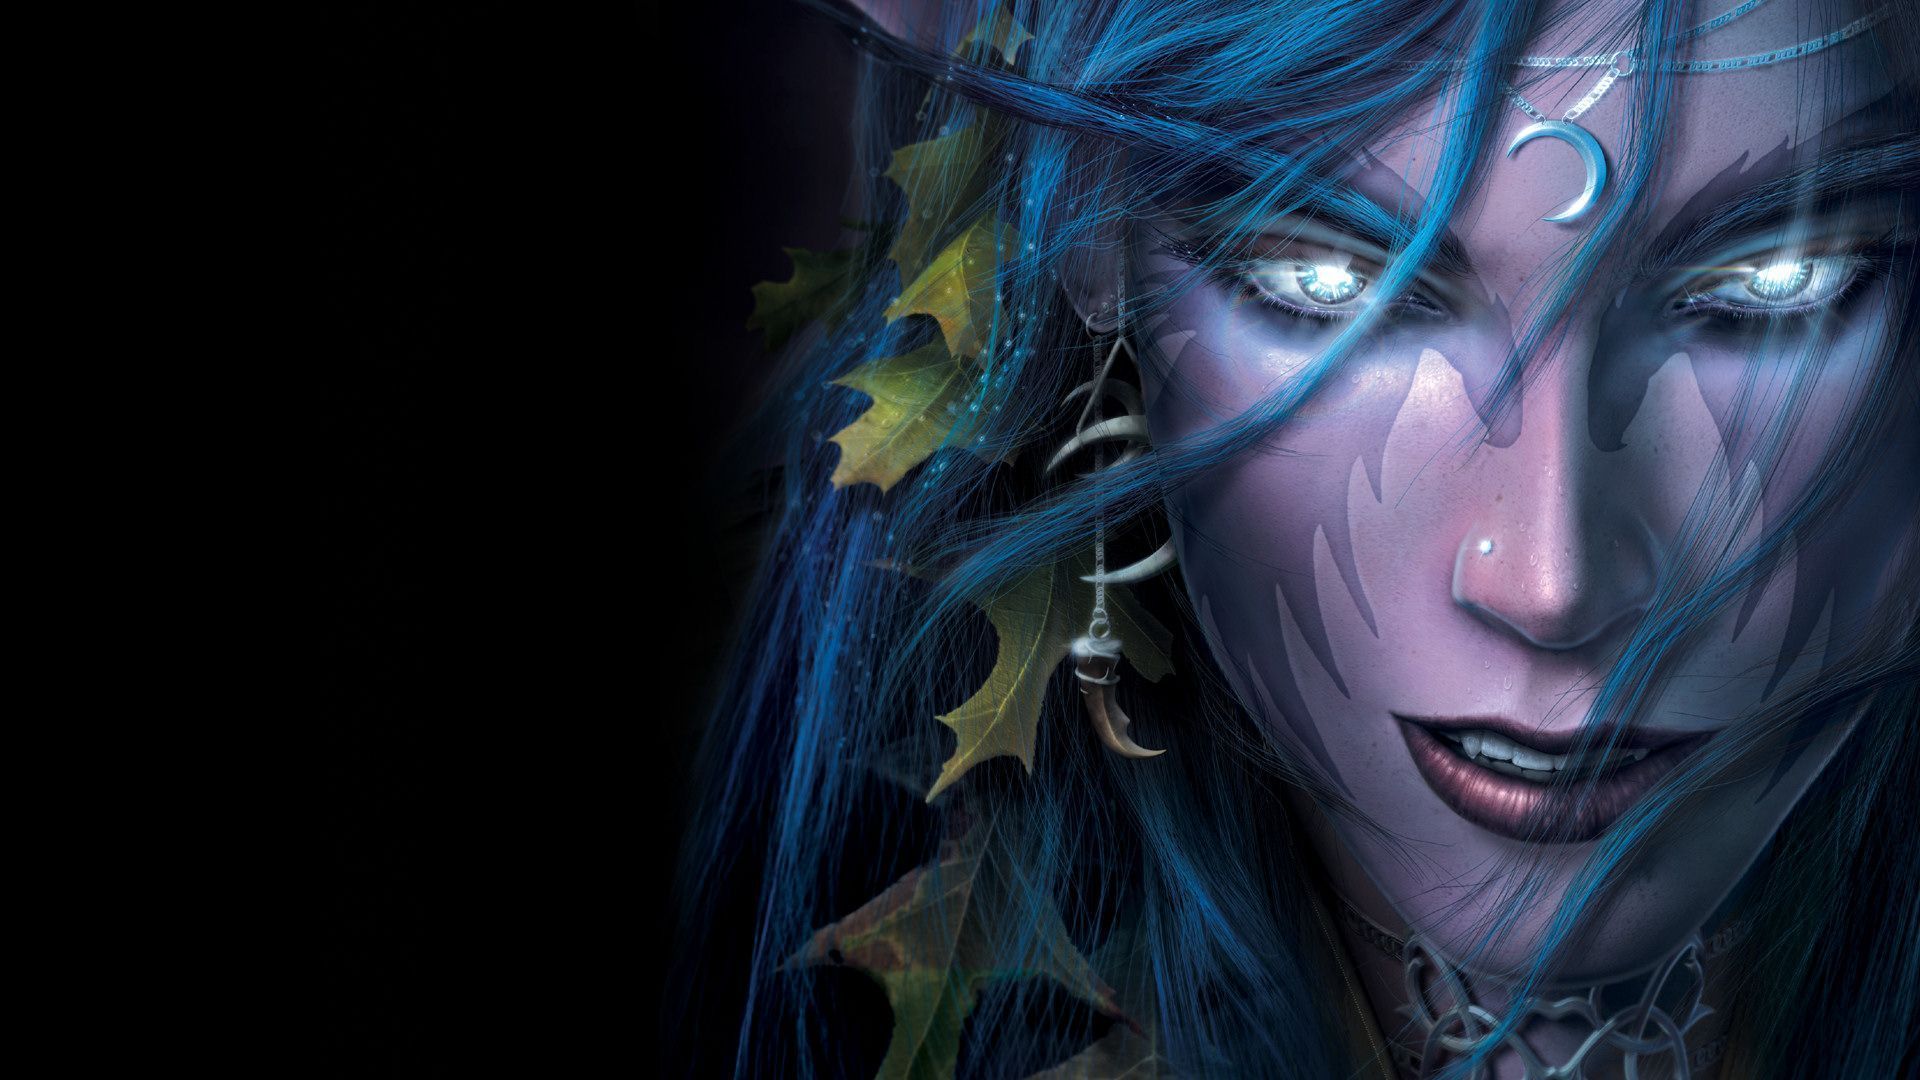 World Of Warcraft Wallpaper Images #qww0 » VaLvewz.com